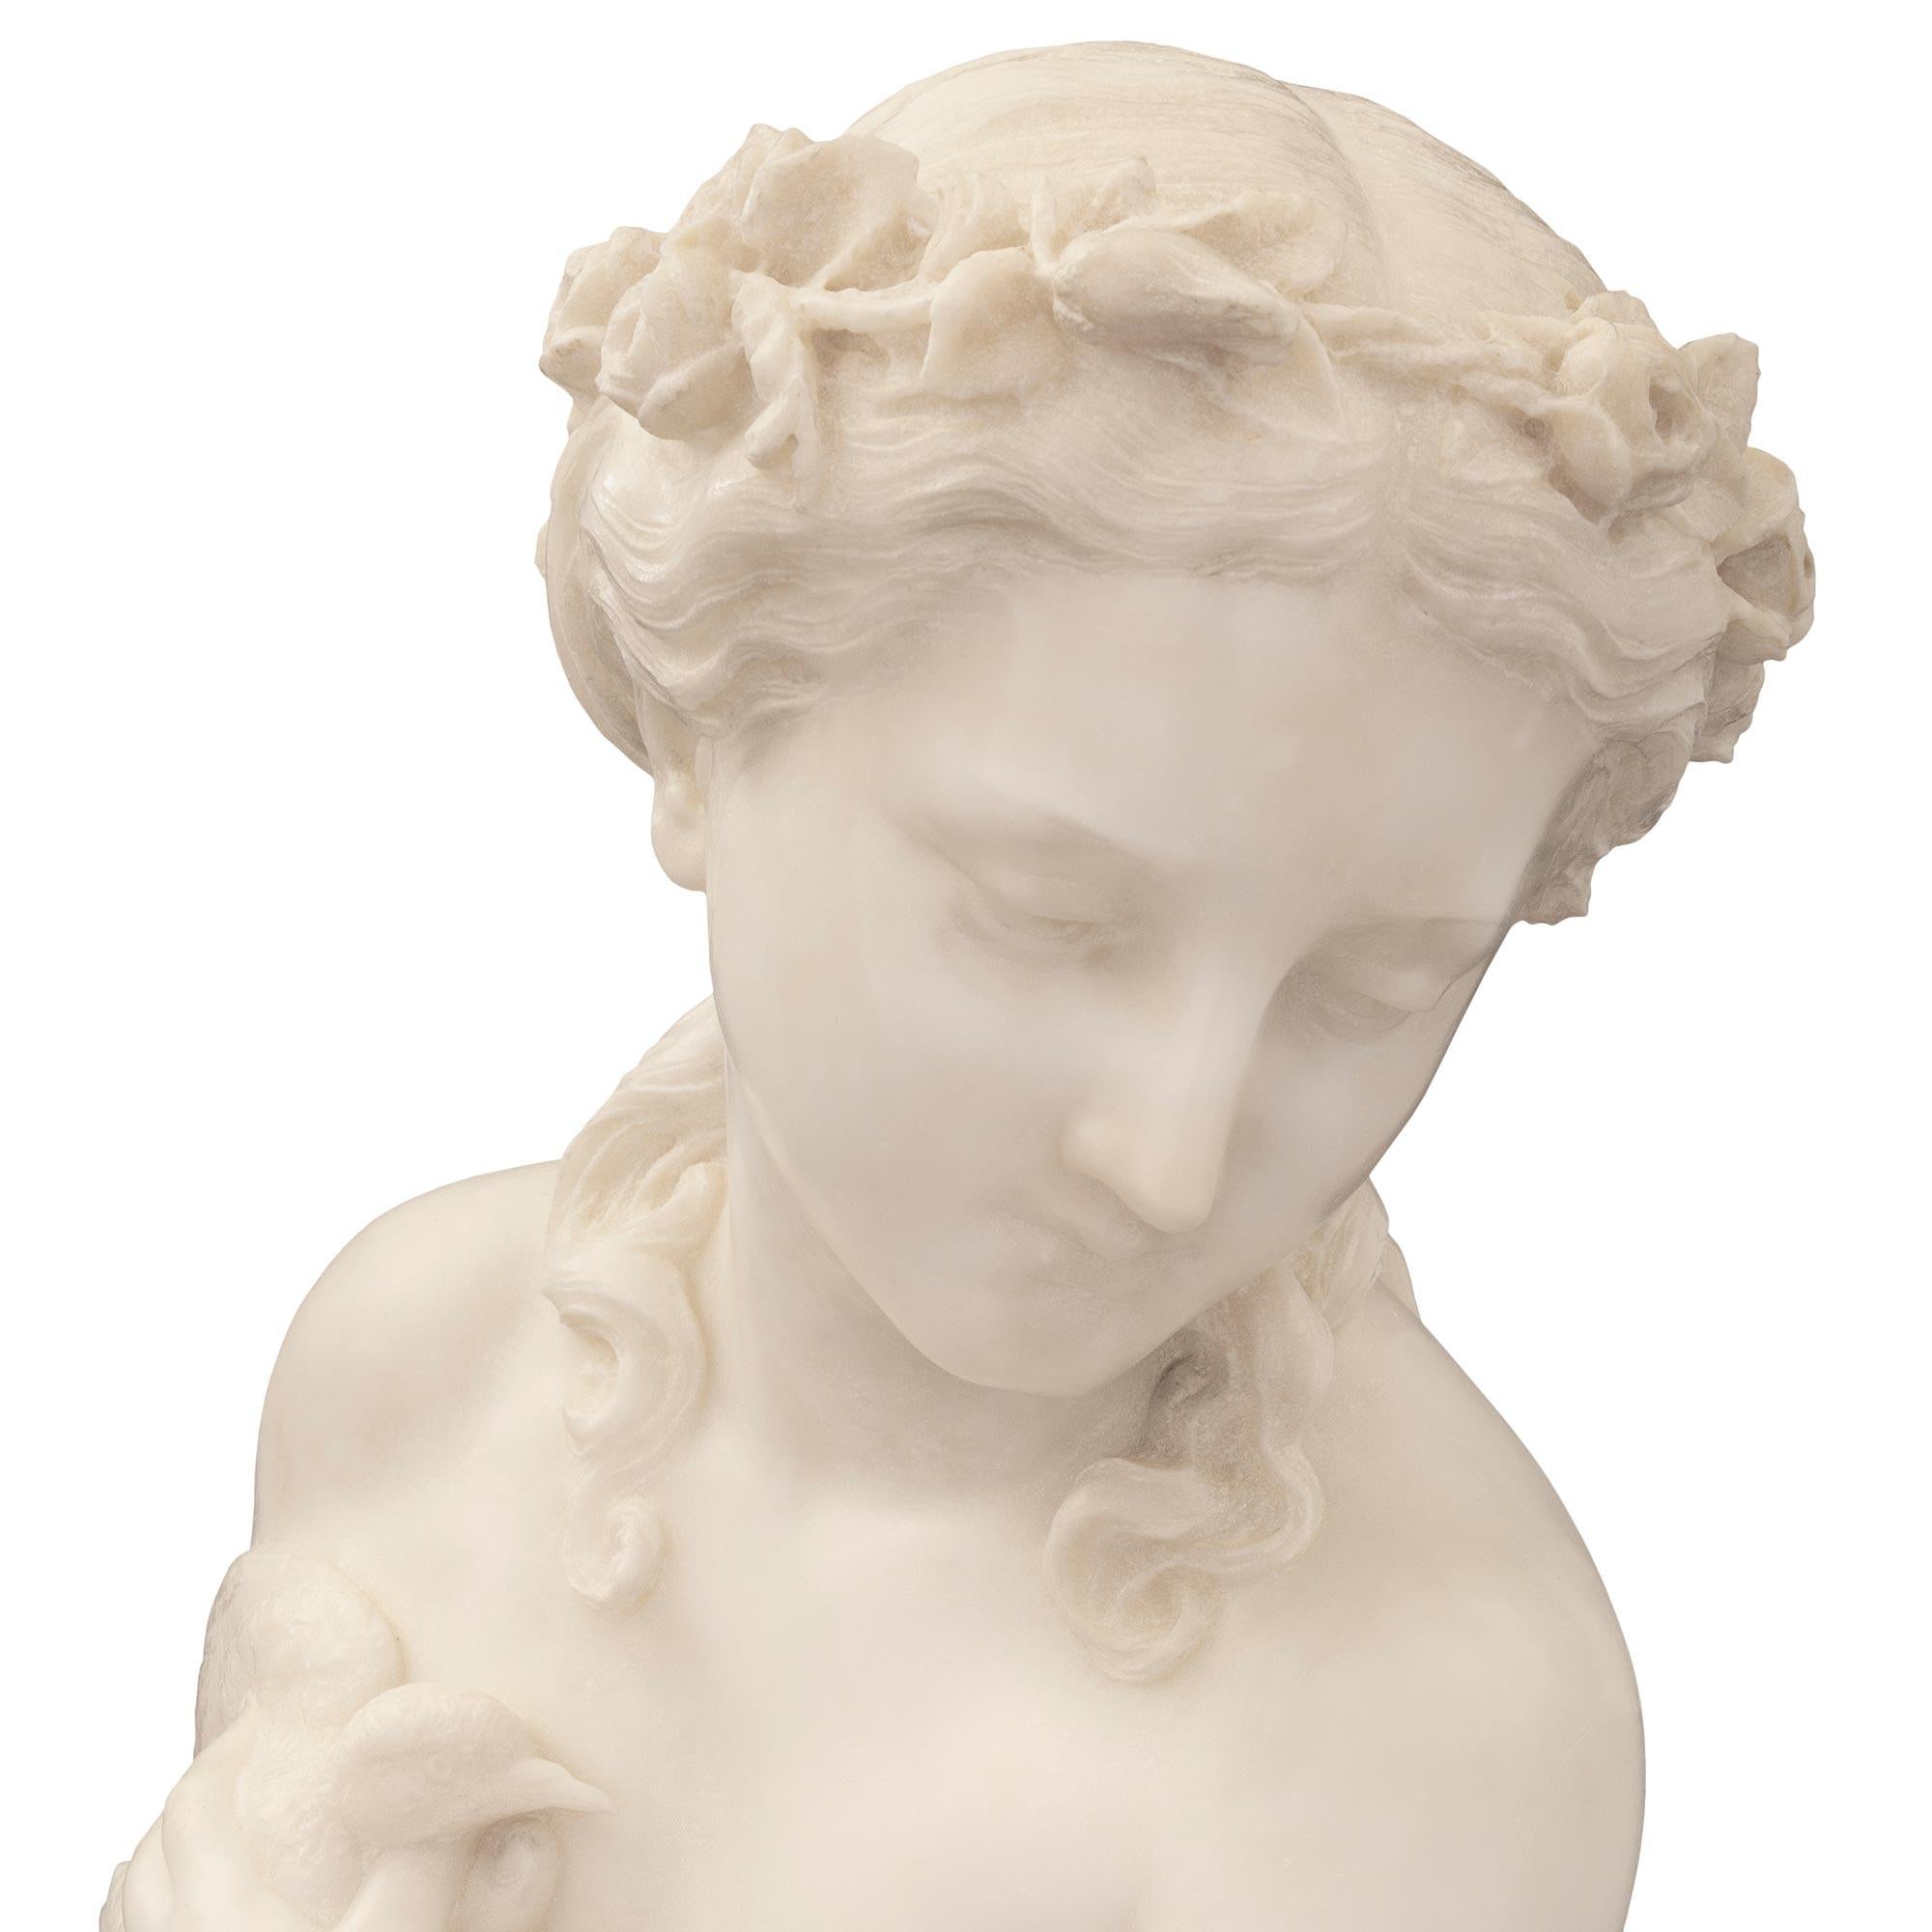 Italian 19th Century White Carrara Marble Statue on Its Original Pedestal For Sale 3